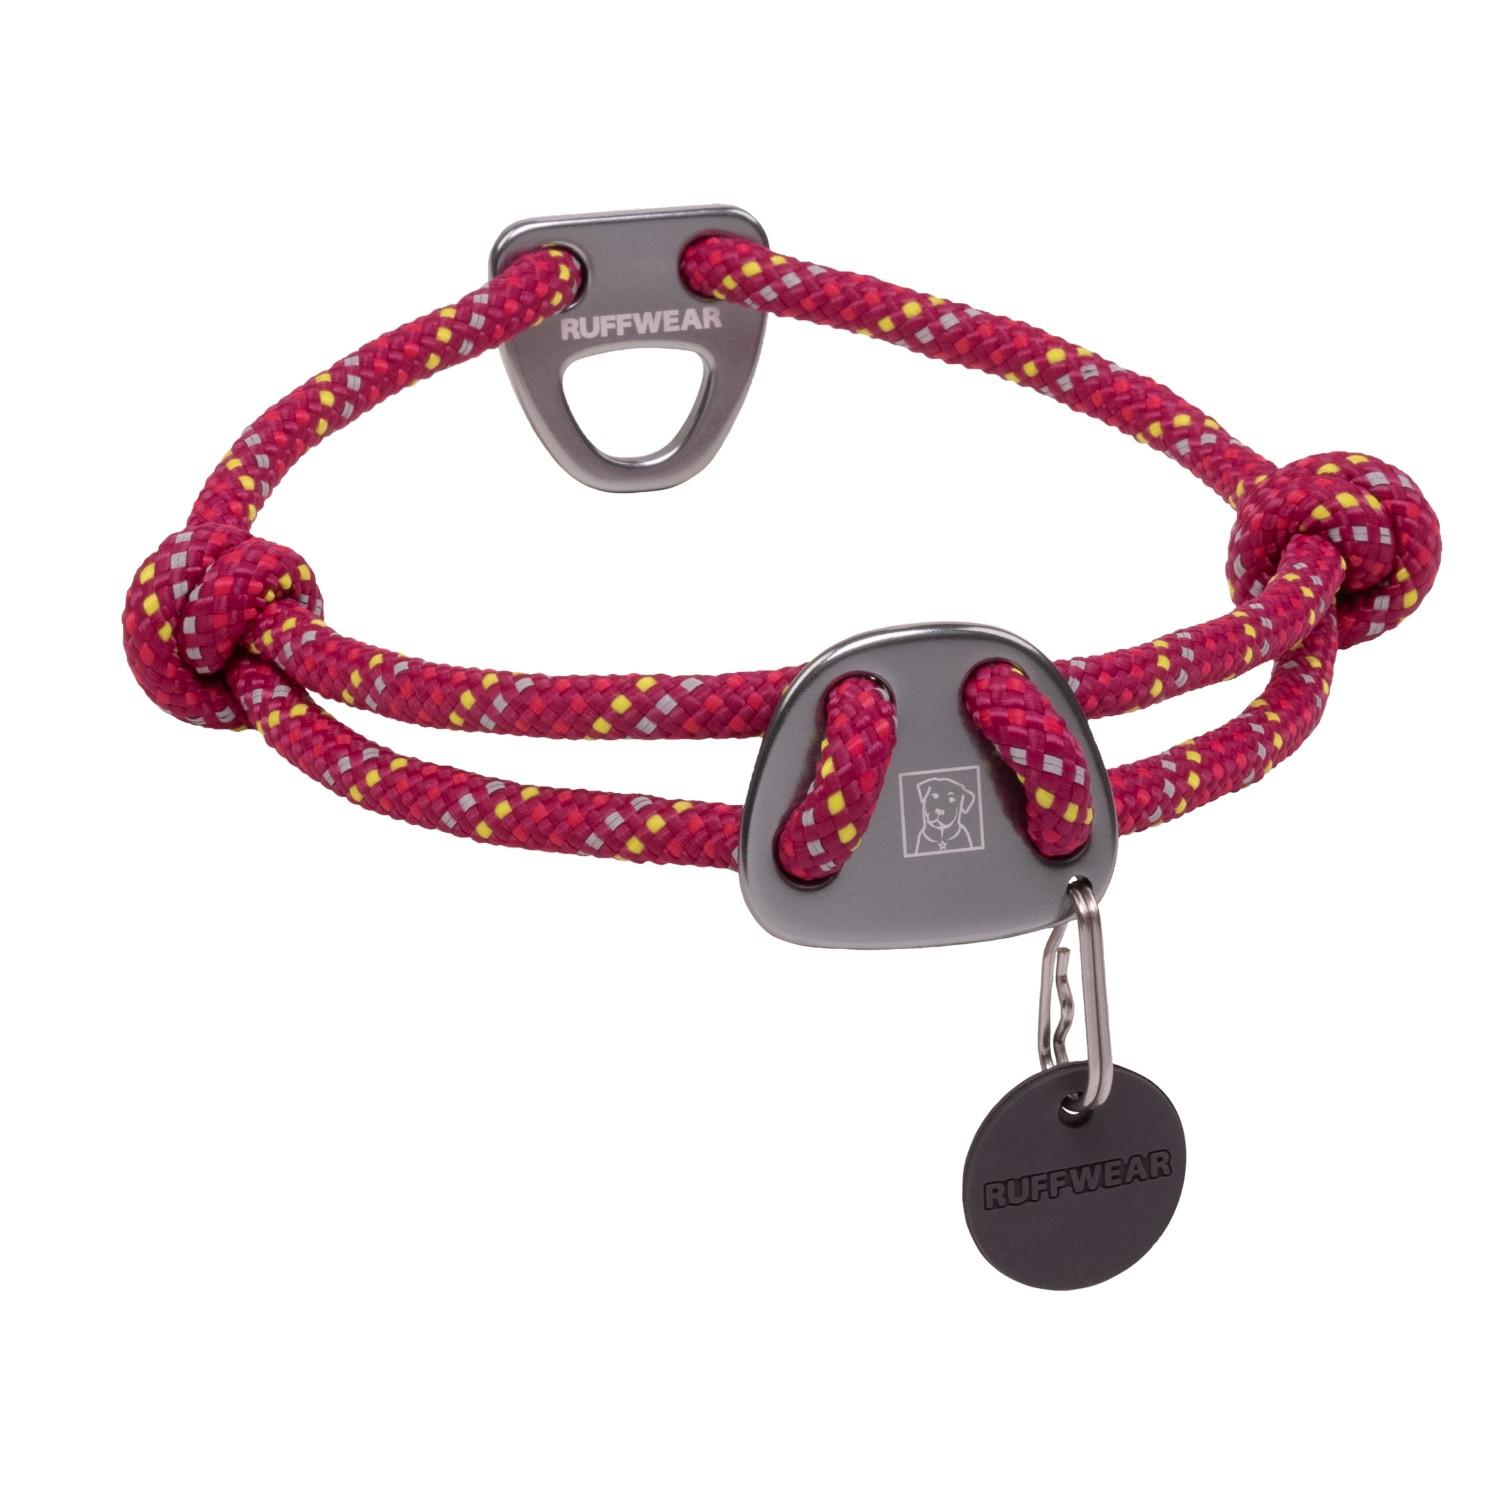 Knot-A-Collar Dog Collar by RuffWear - Hibiscus Pink